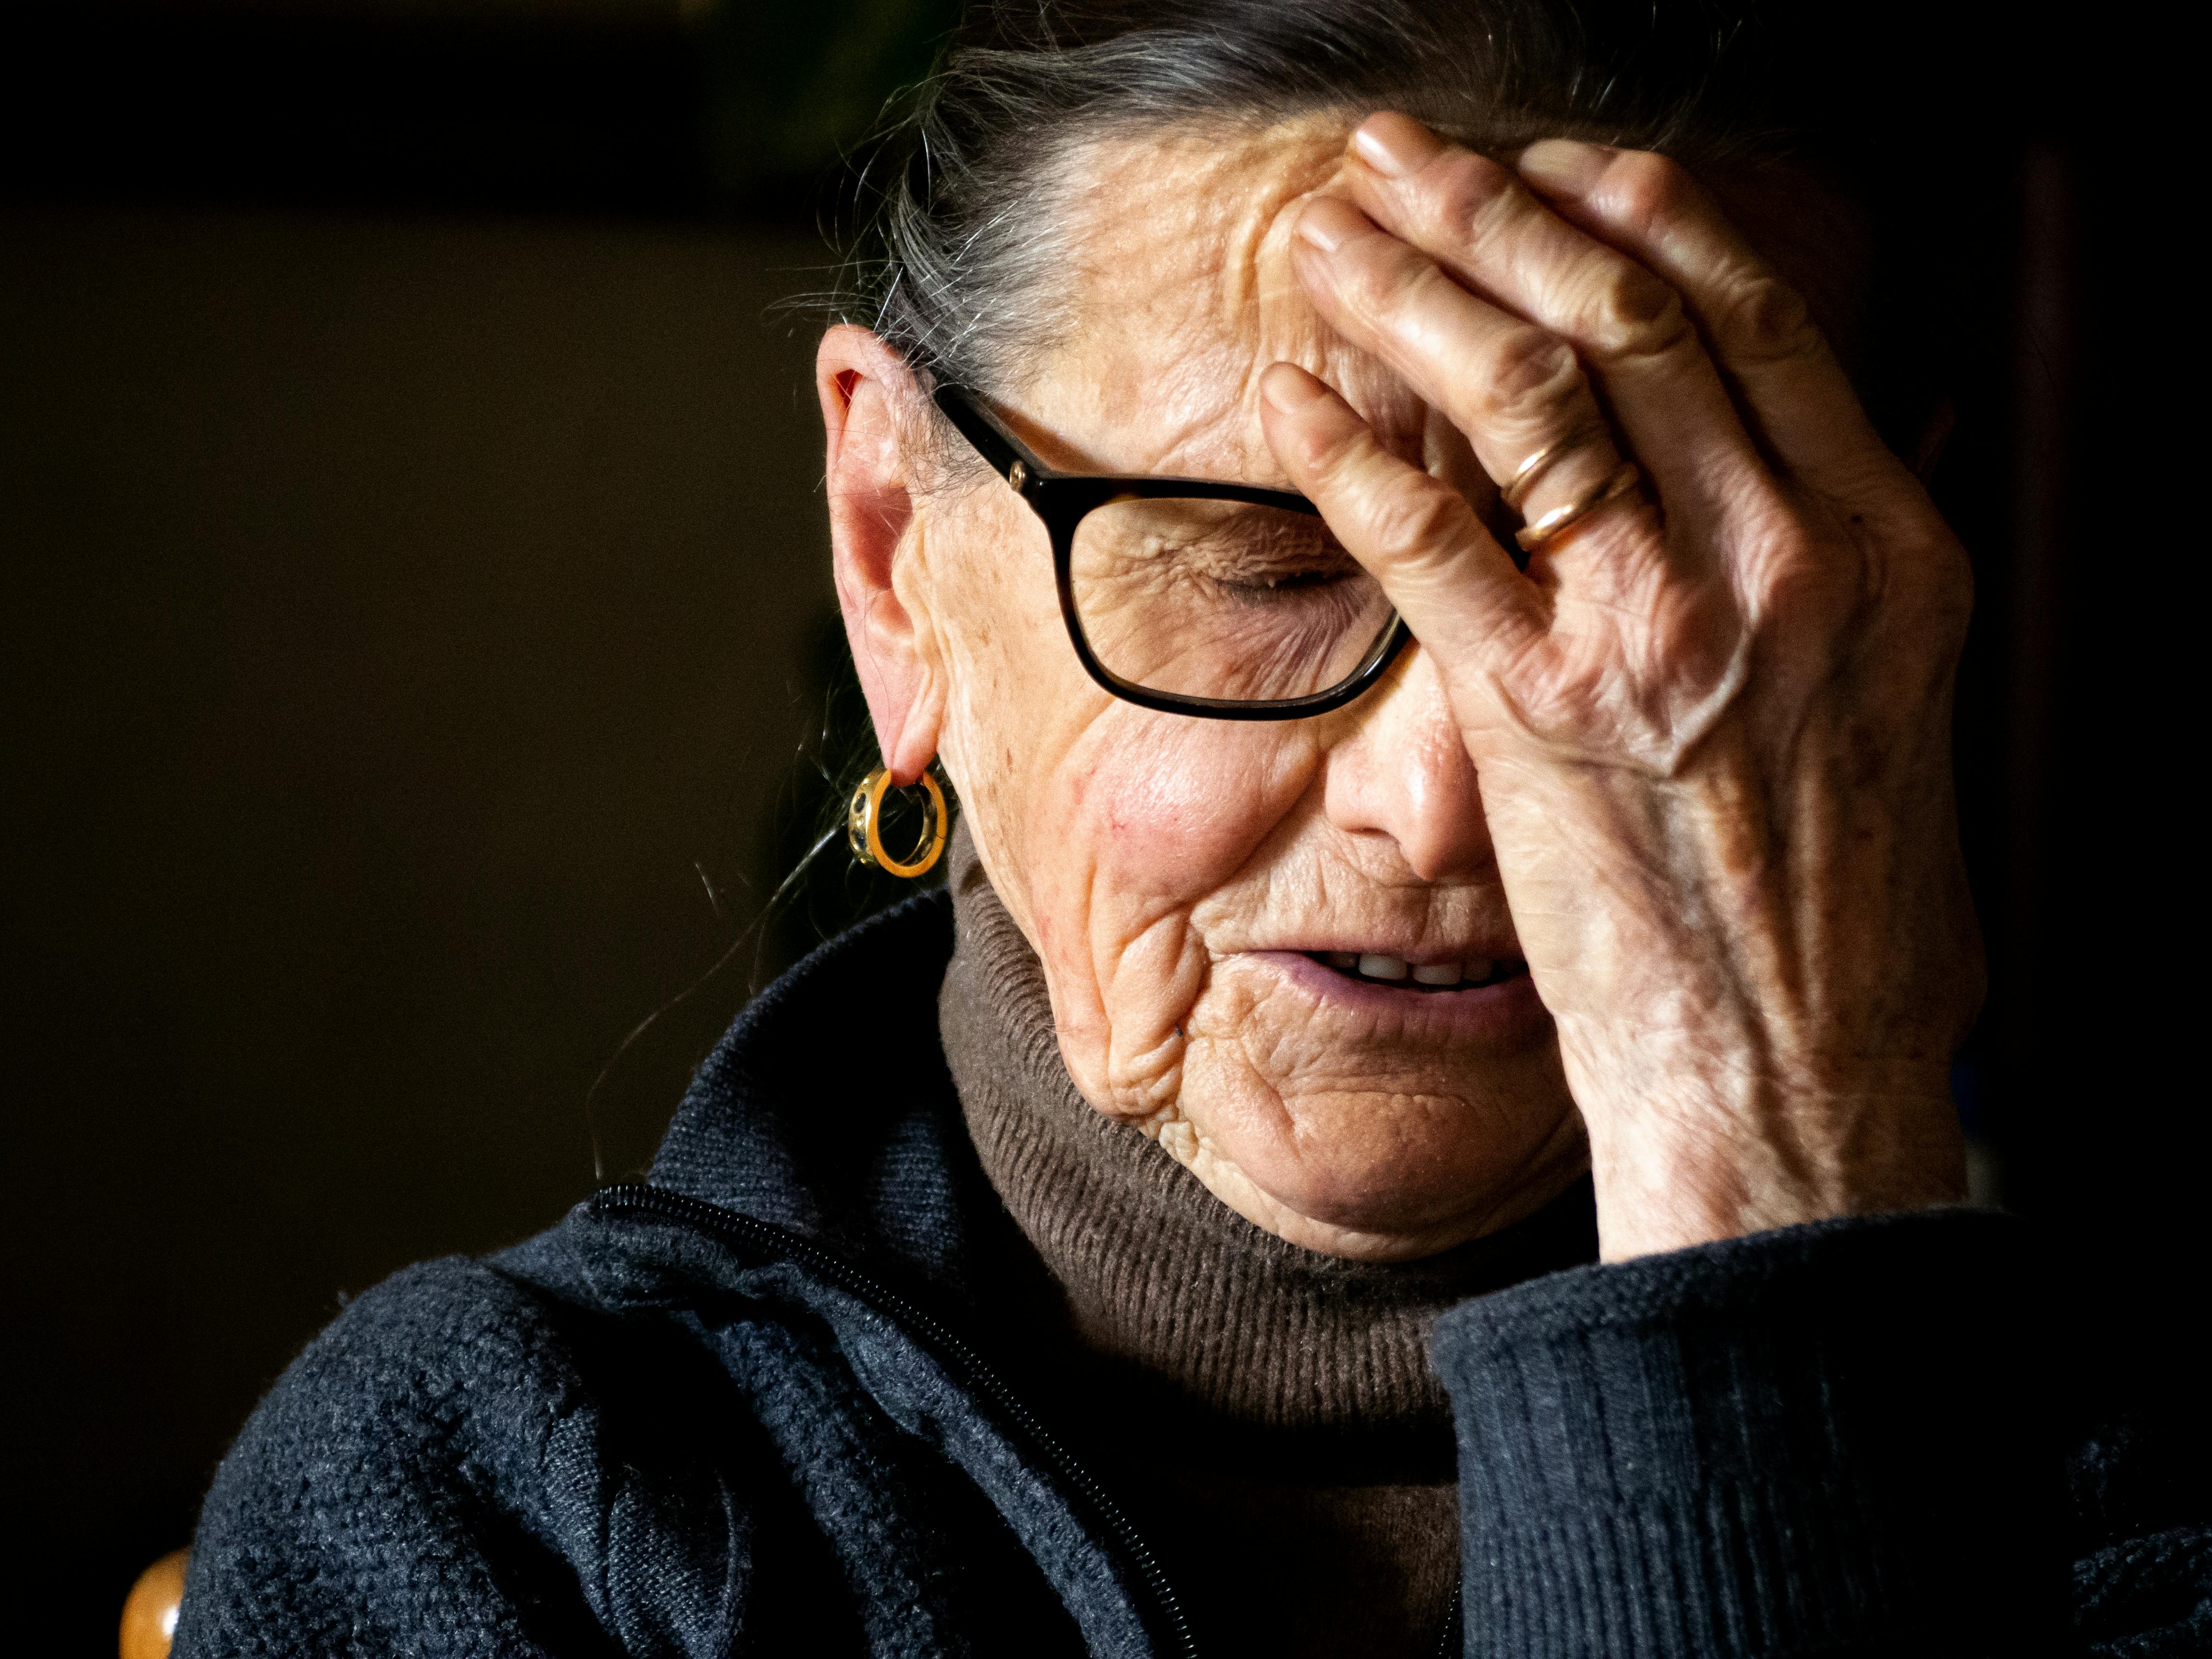 Upset elderly woman | Source: Pexels